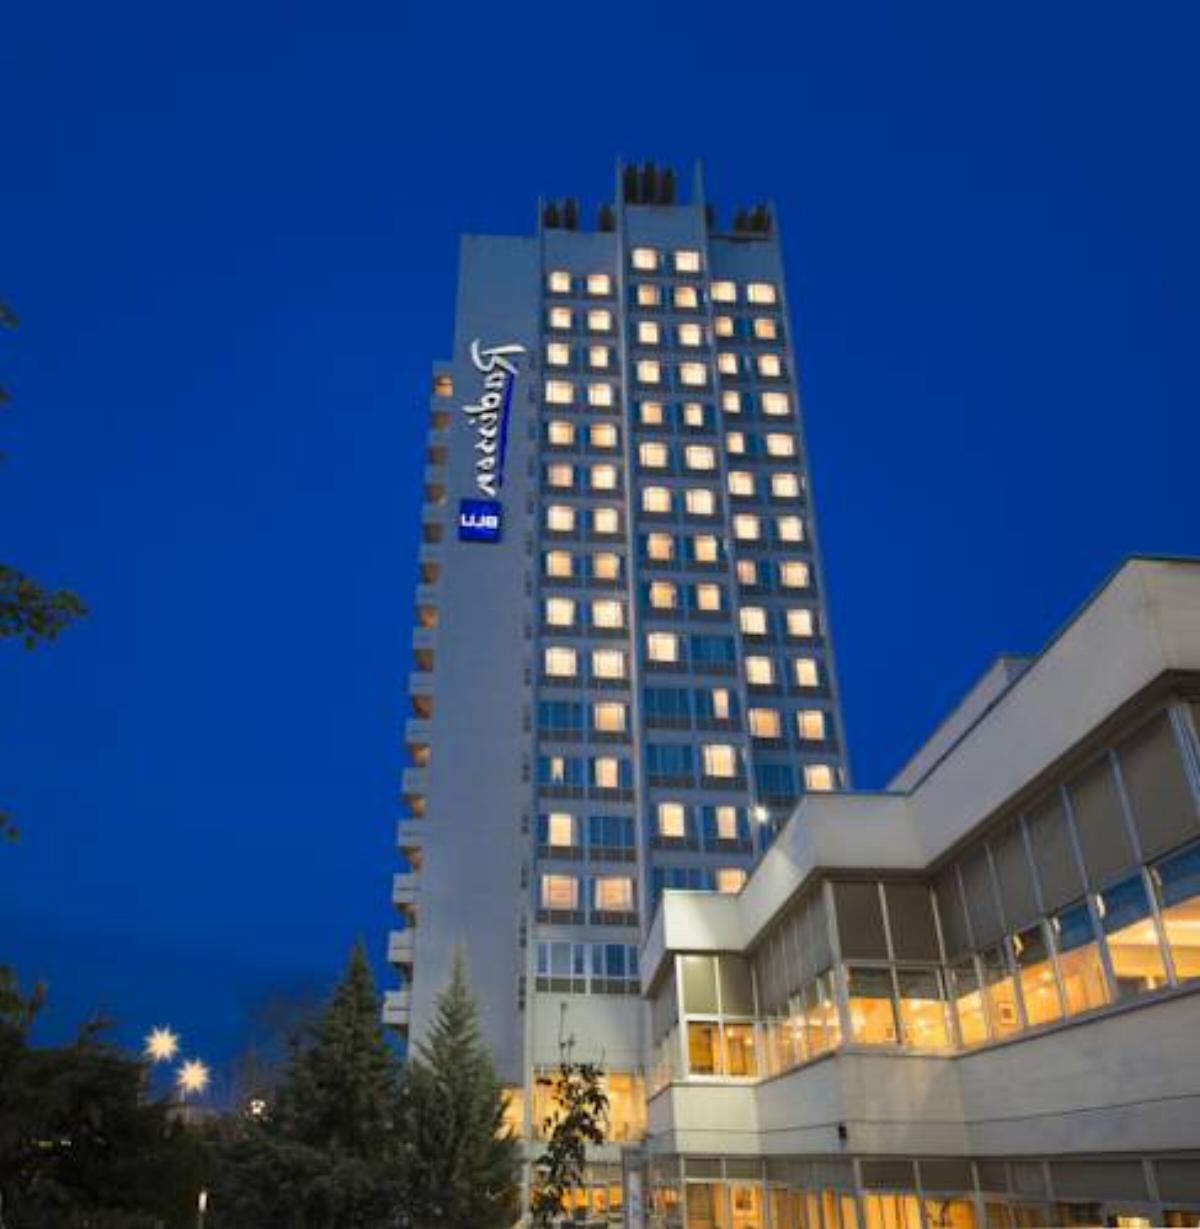 Radisson Blu Ankara Hotel Ankara Turkey